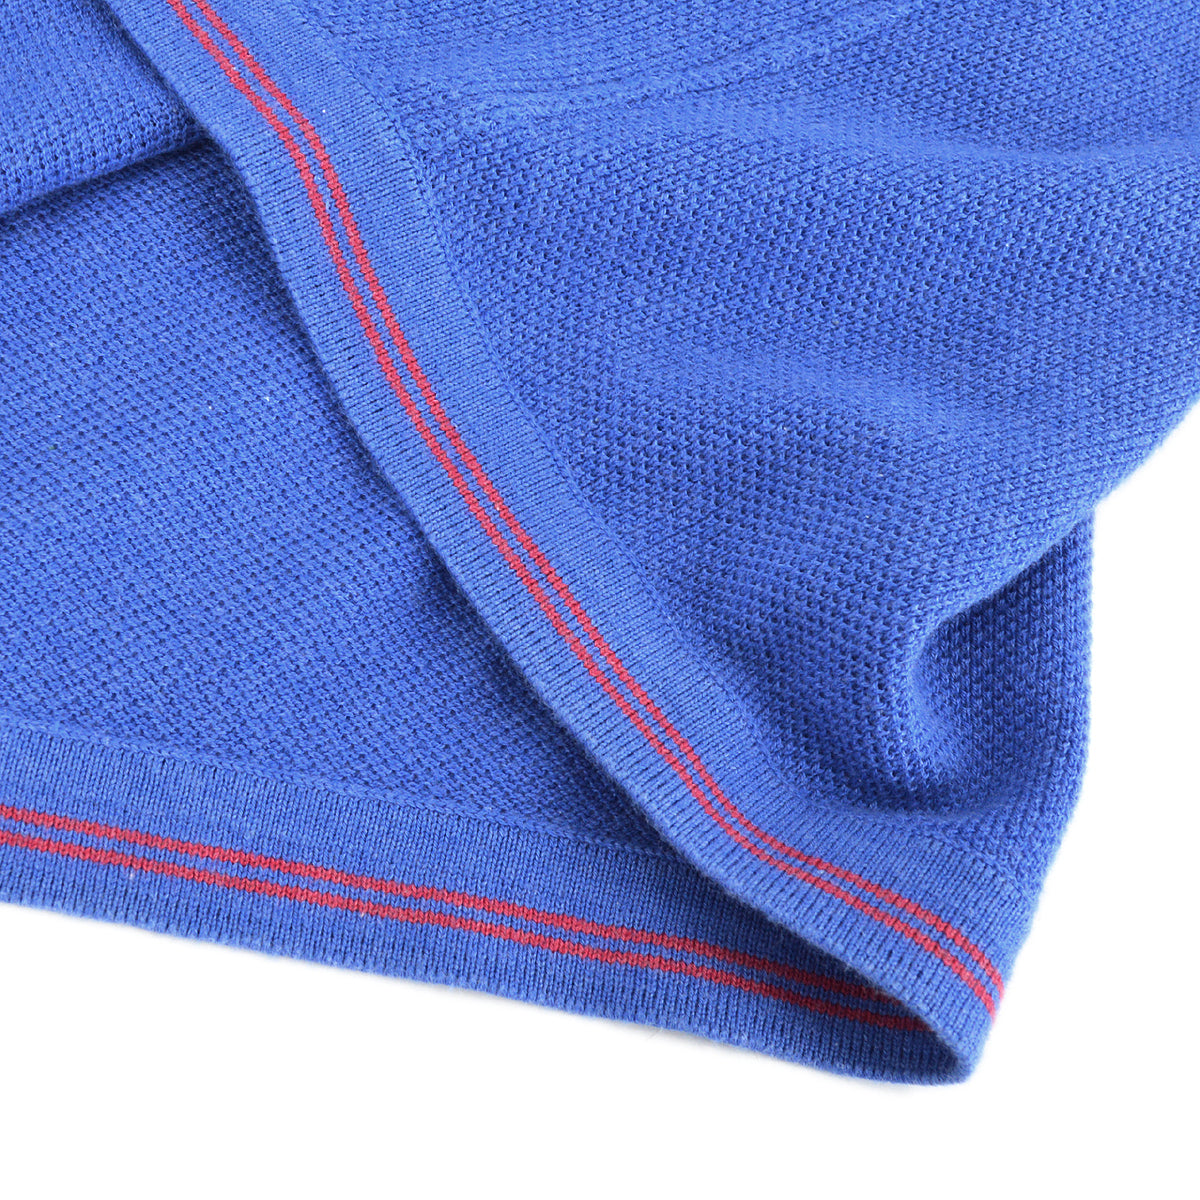 Chanel Short Sleeve Knit Tops Shirt Blue 06S 